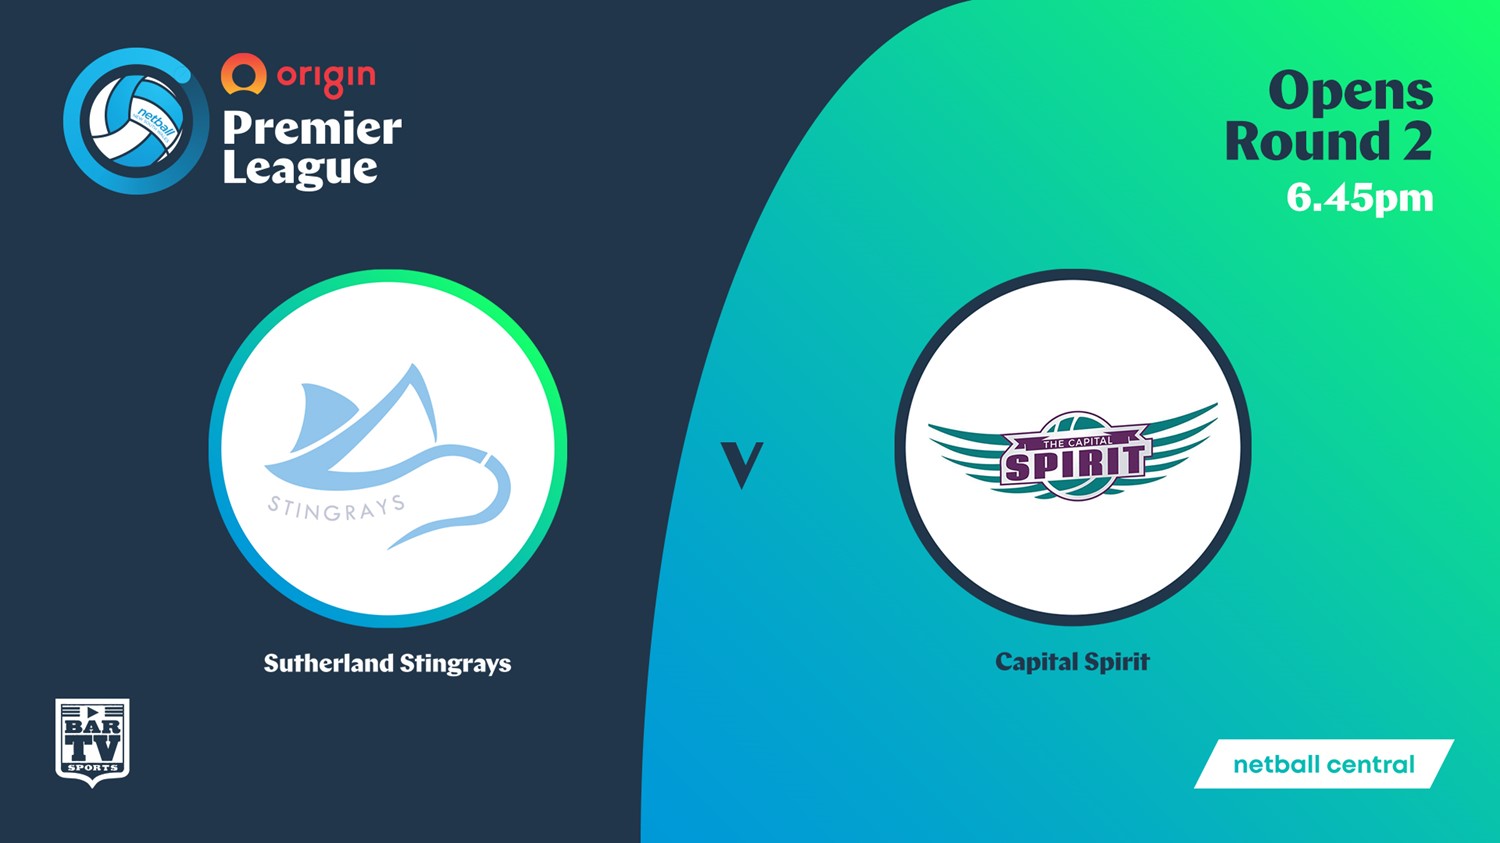 NSW Prem League Round 2 Court 2 - Opens - Sutherland Stingrays v Capital Spirit Minigame Slate Image